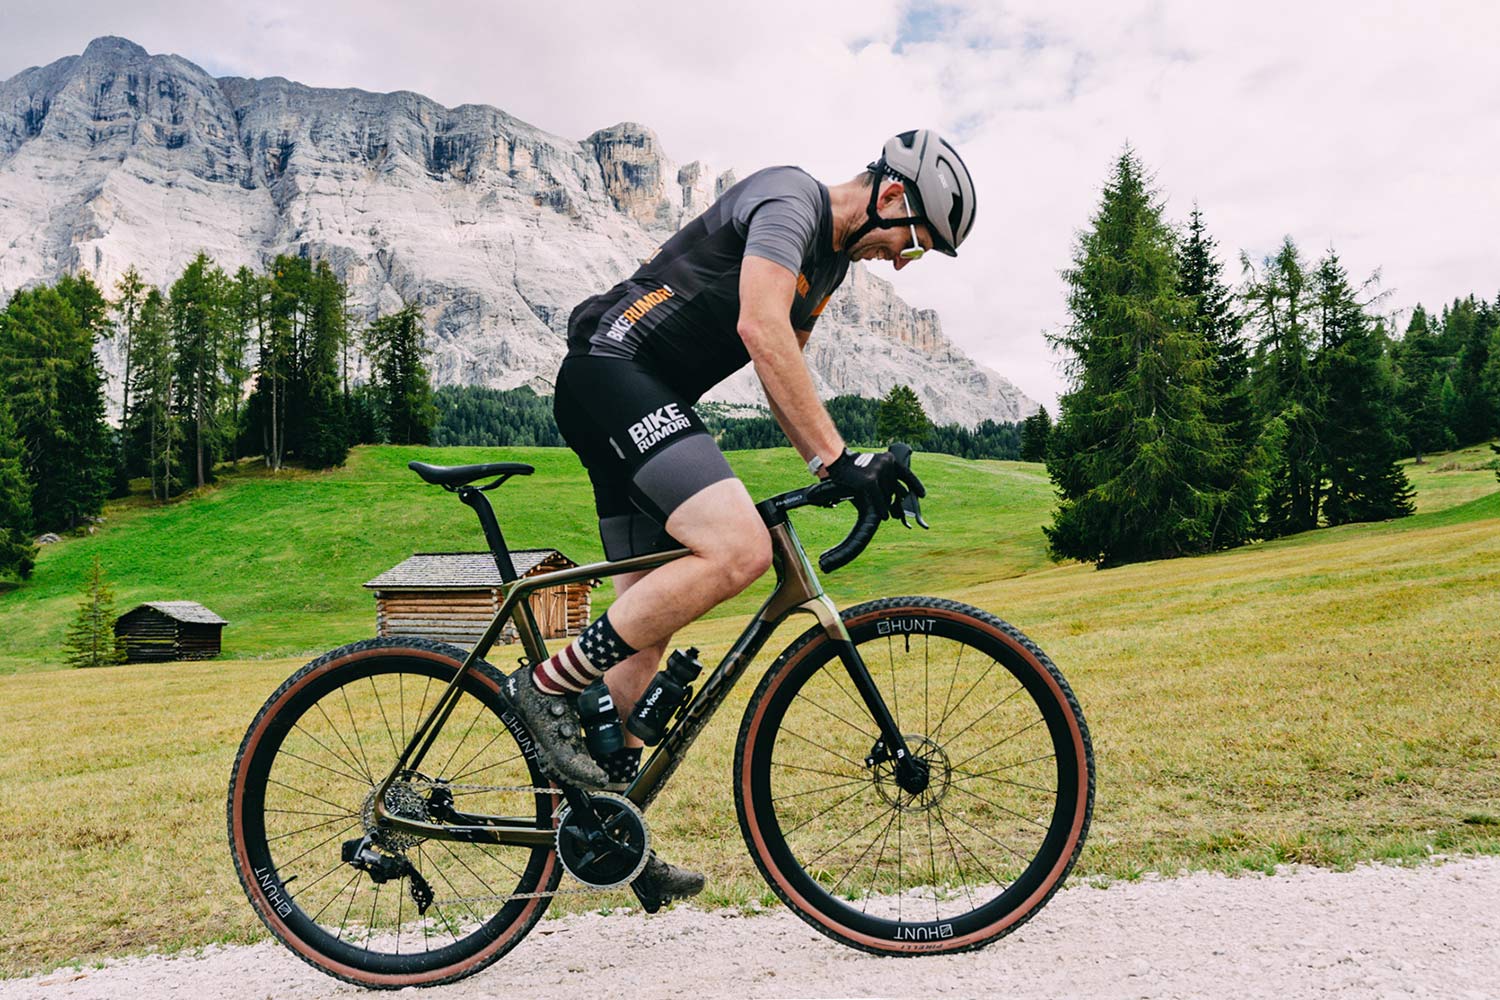 2022 Basso Palta II carbon gravel bike review made-in-Italy, photo by Francesco Bonato, climbing